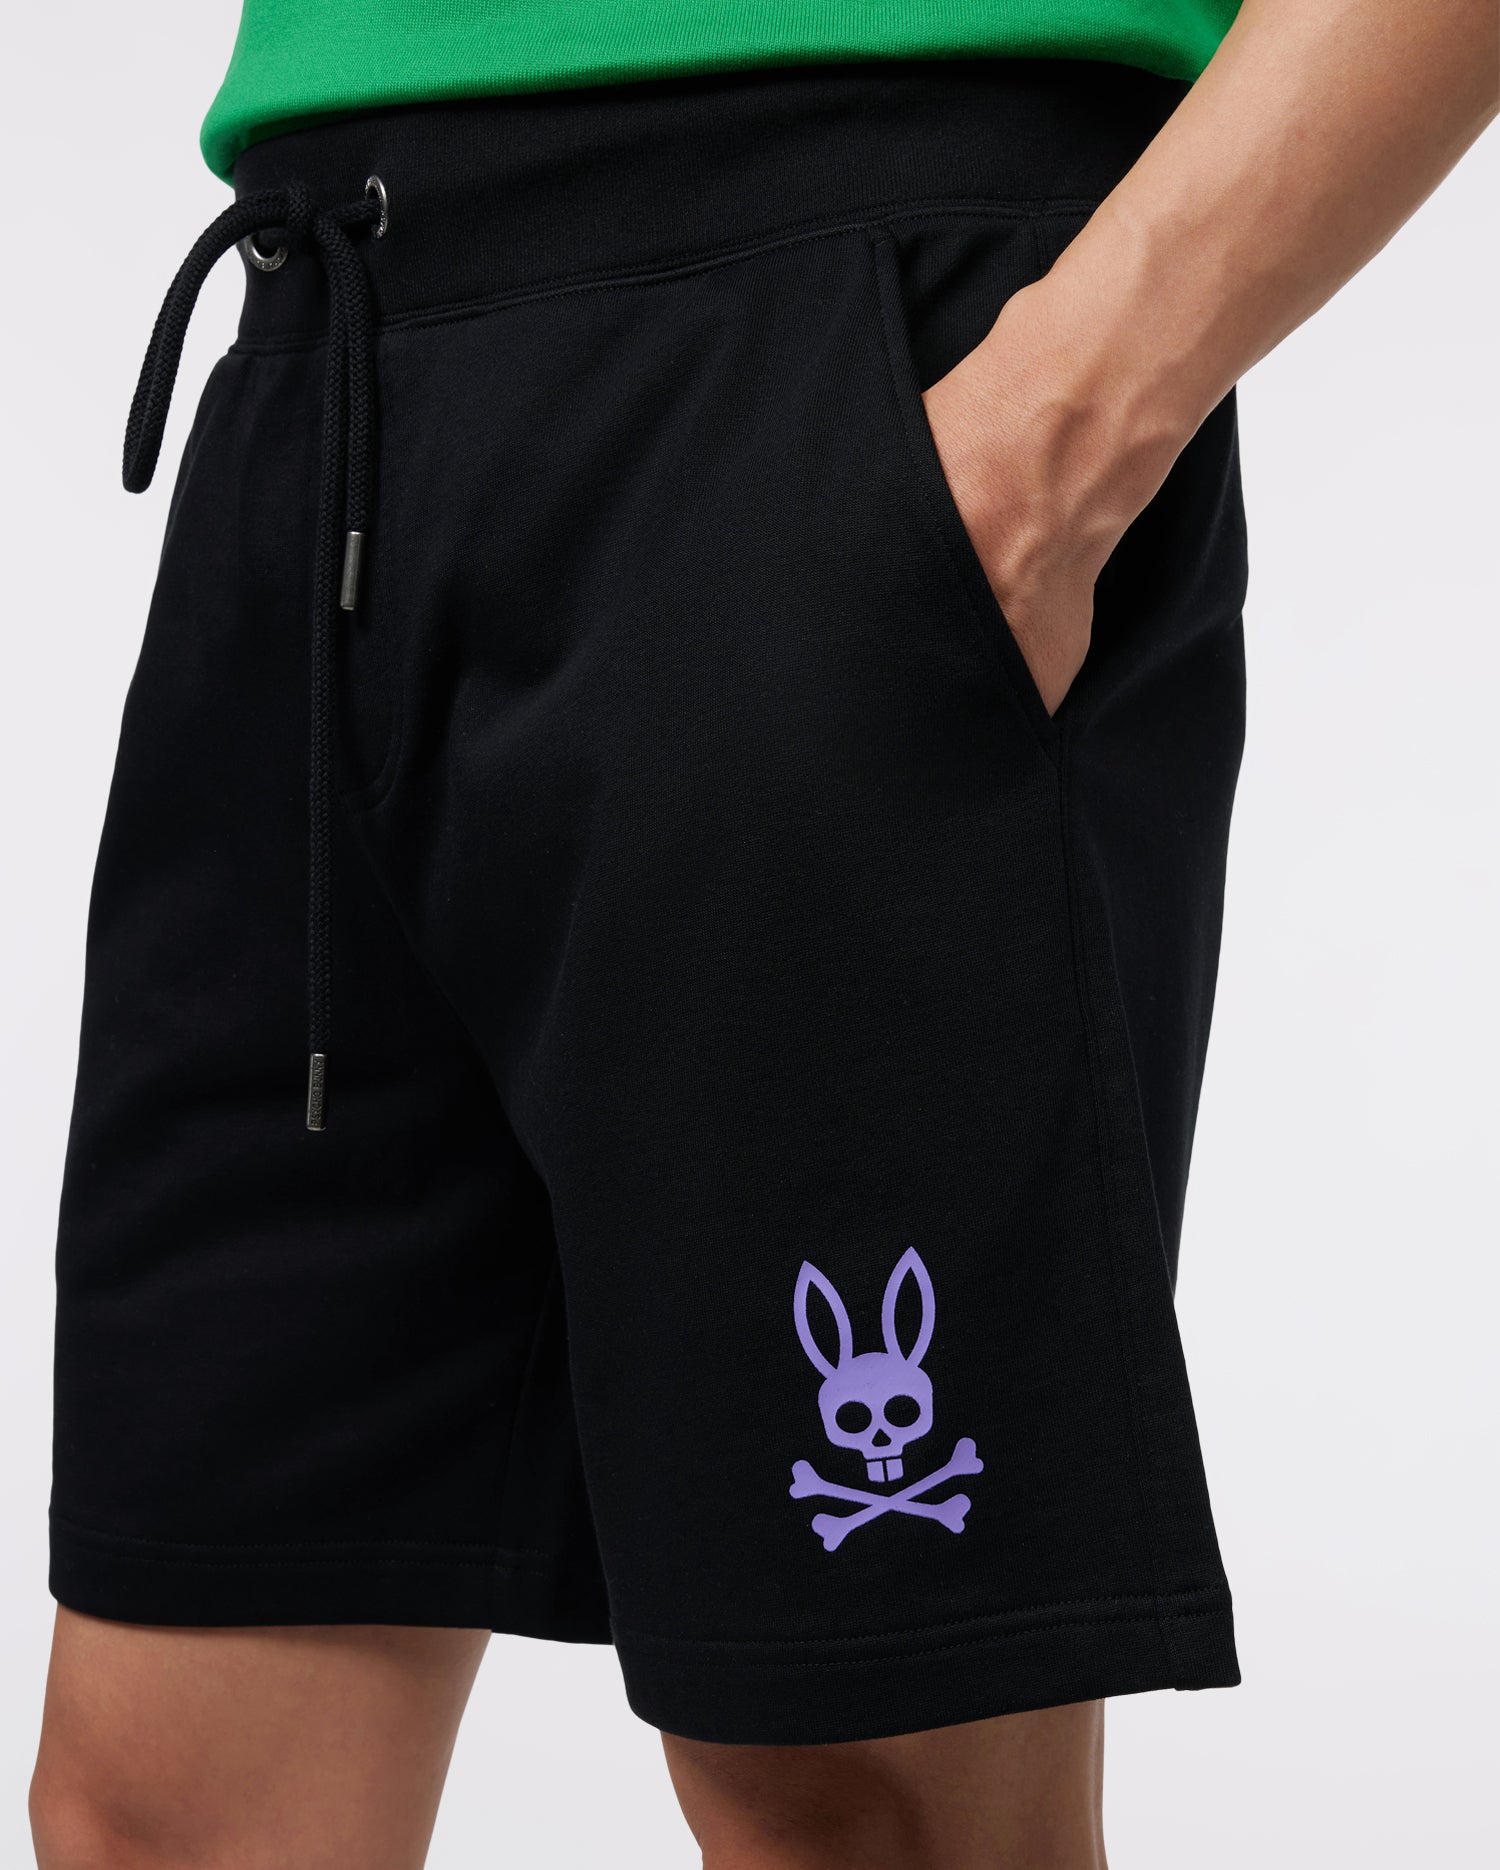 Men's Shorts | Casual Flat Front Shorts | Psycho Bunny